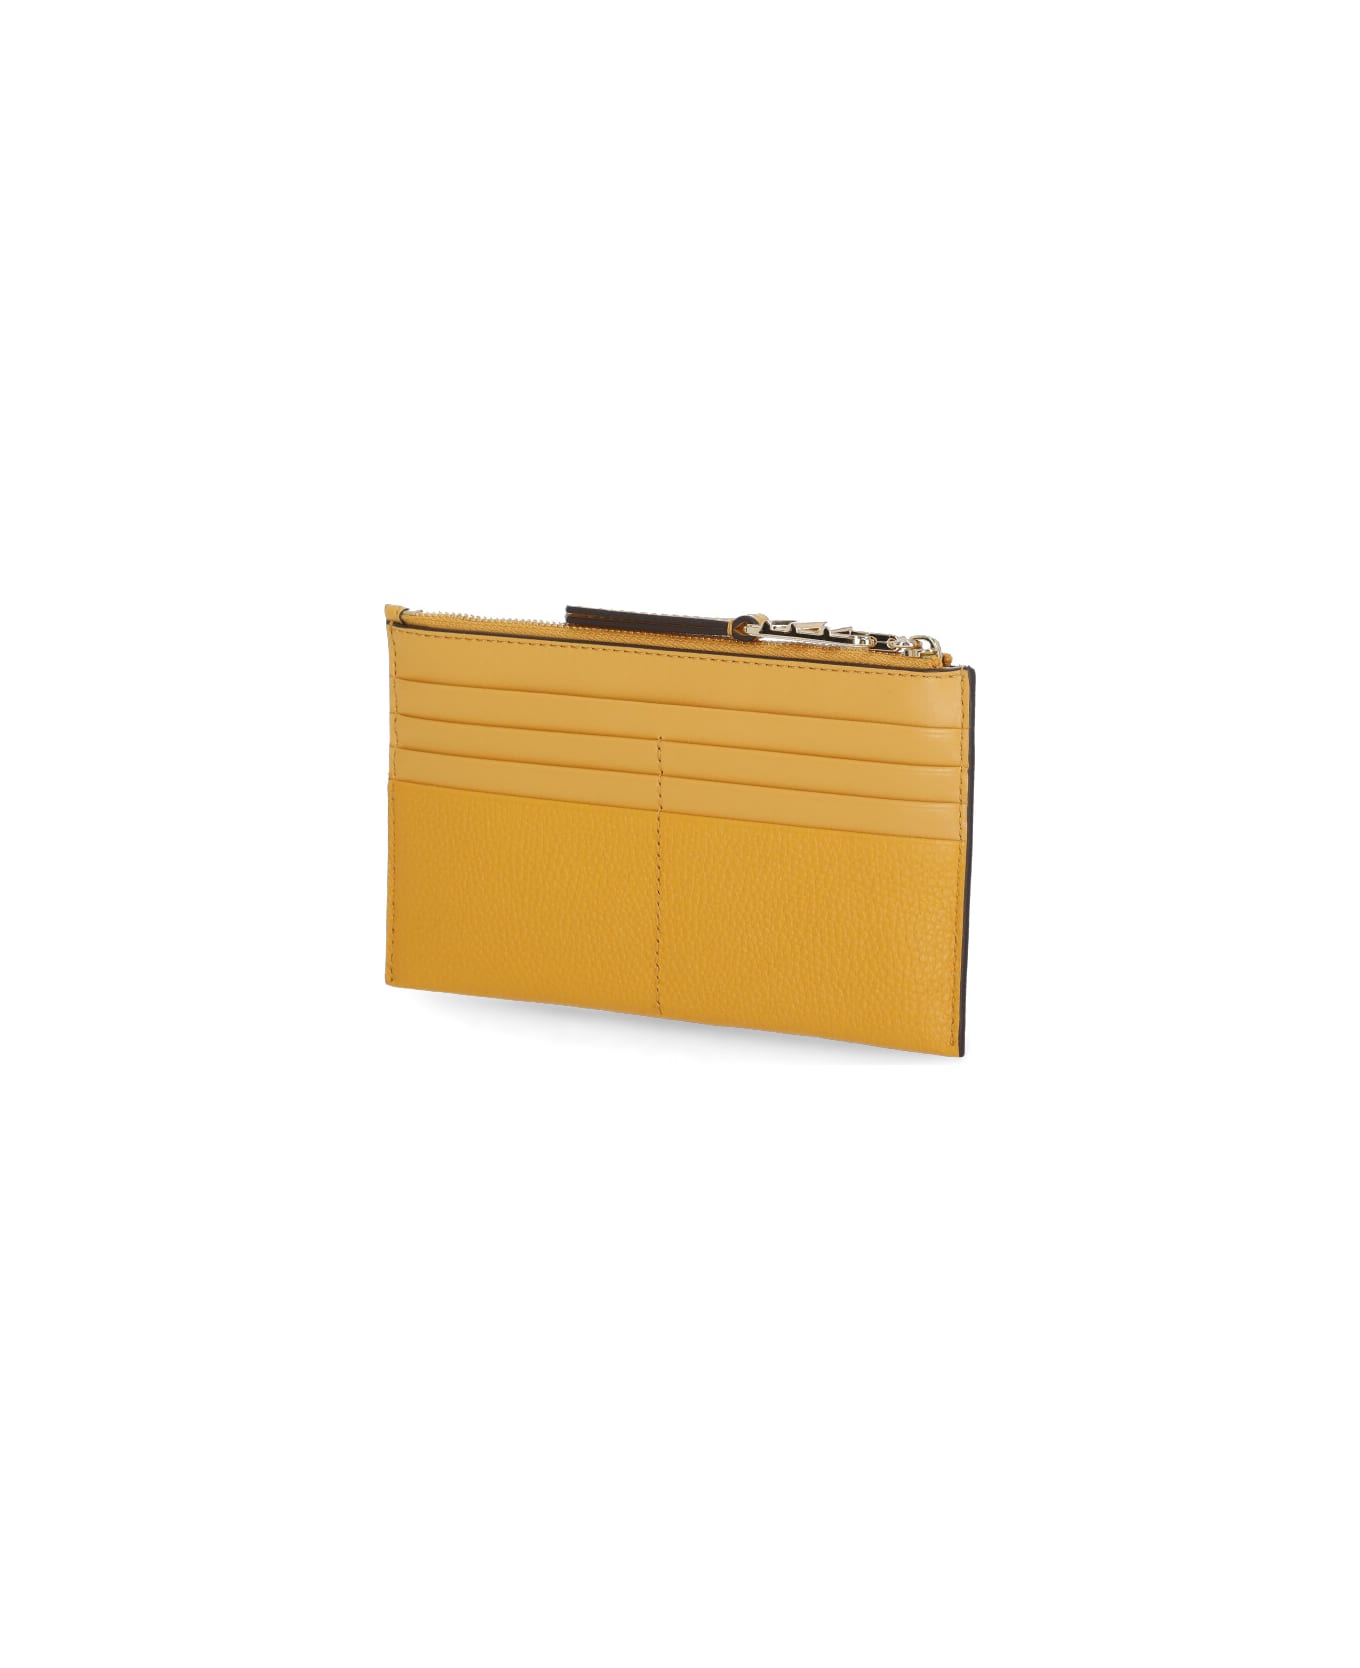 Michael Kors Logo Plaque Zipped Wallet - Yellow 財布